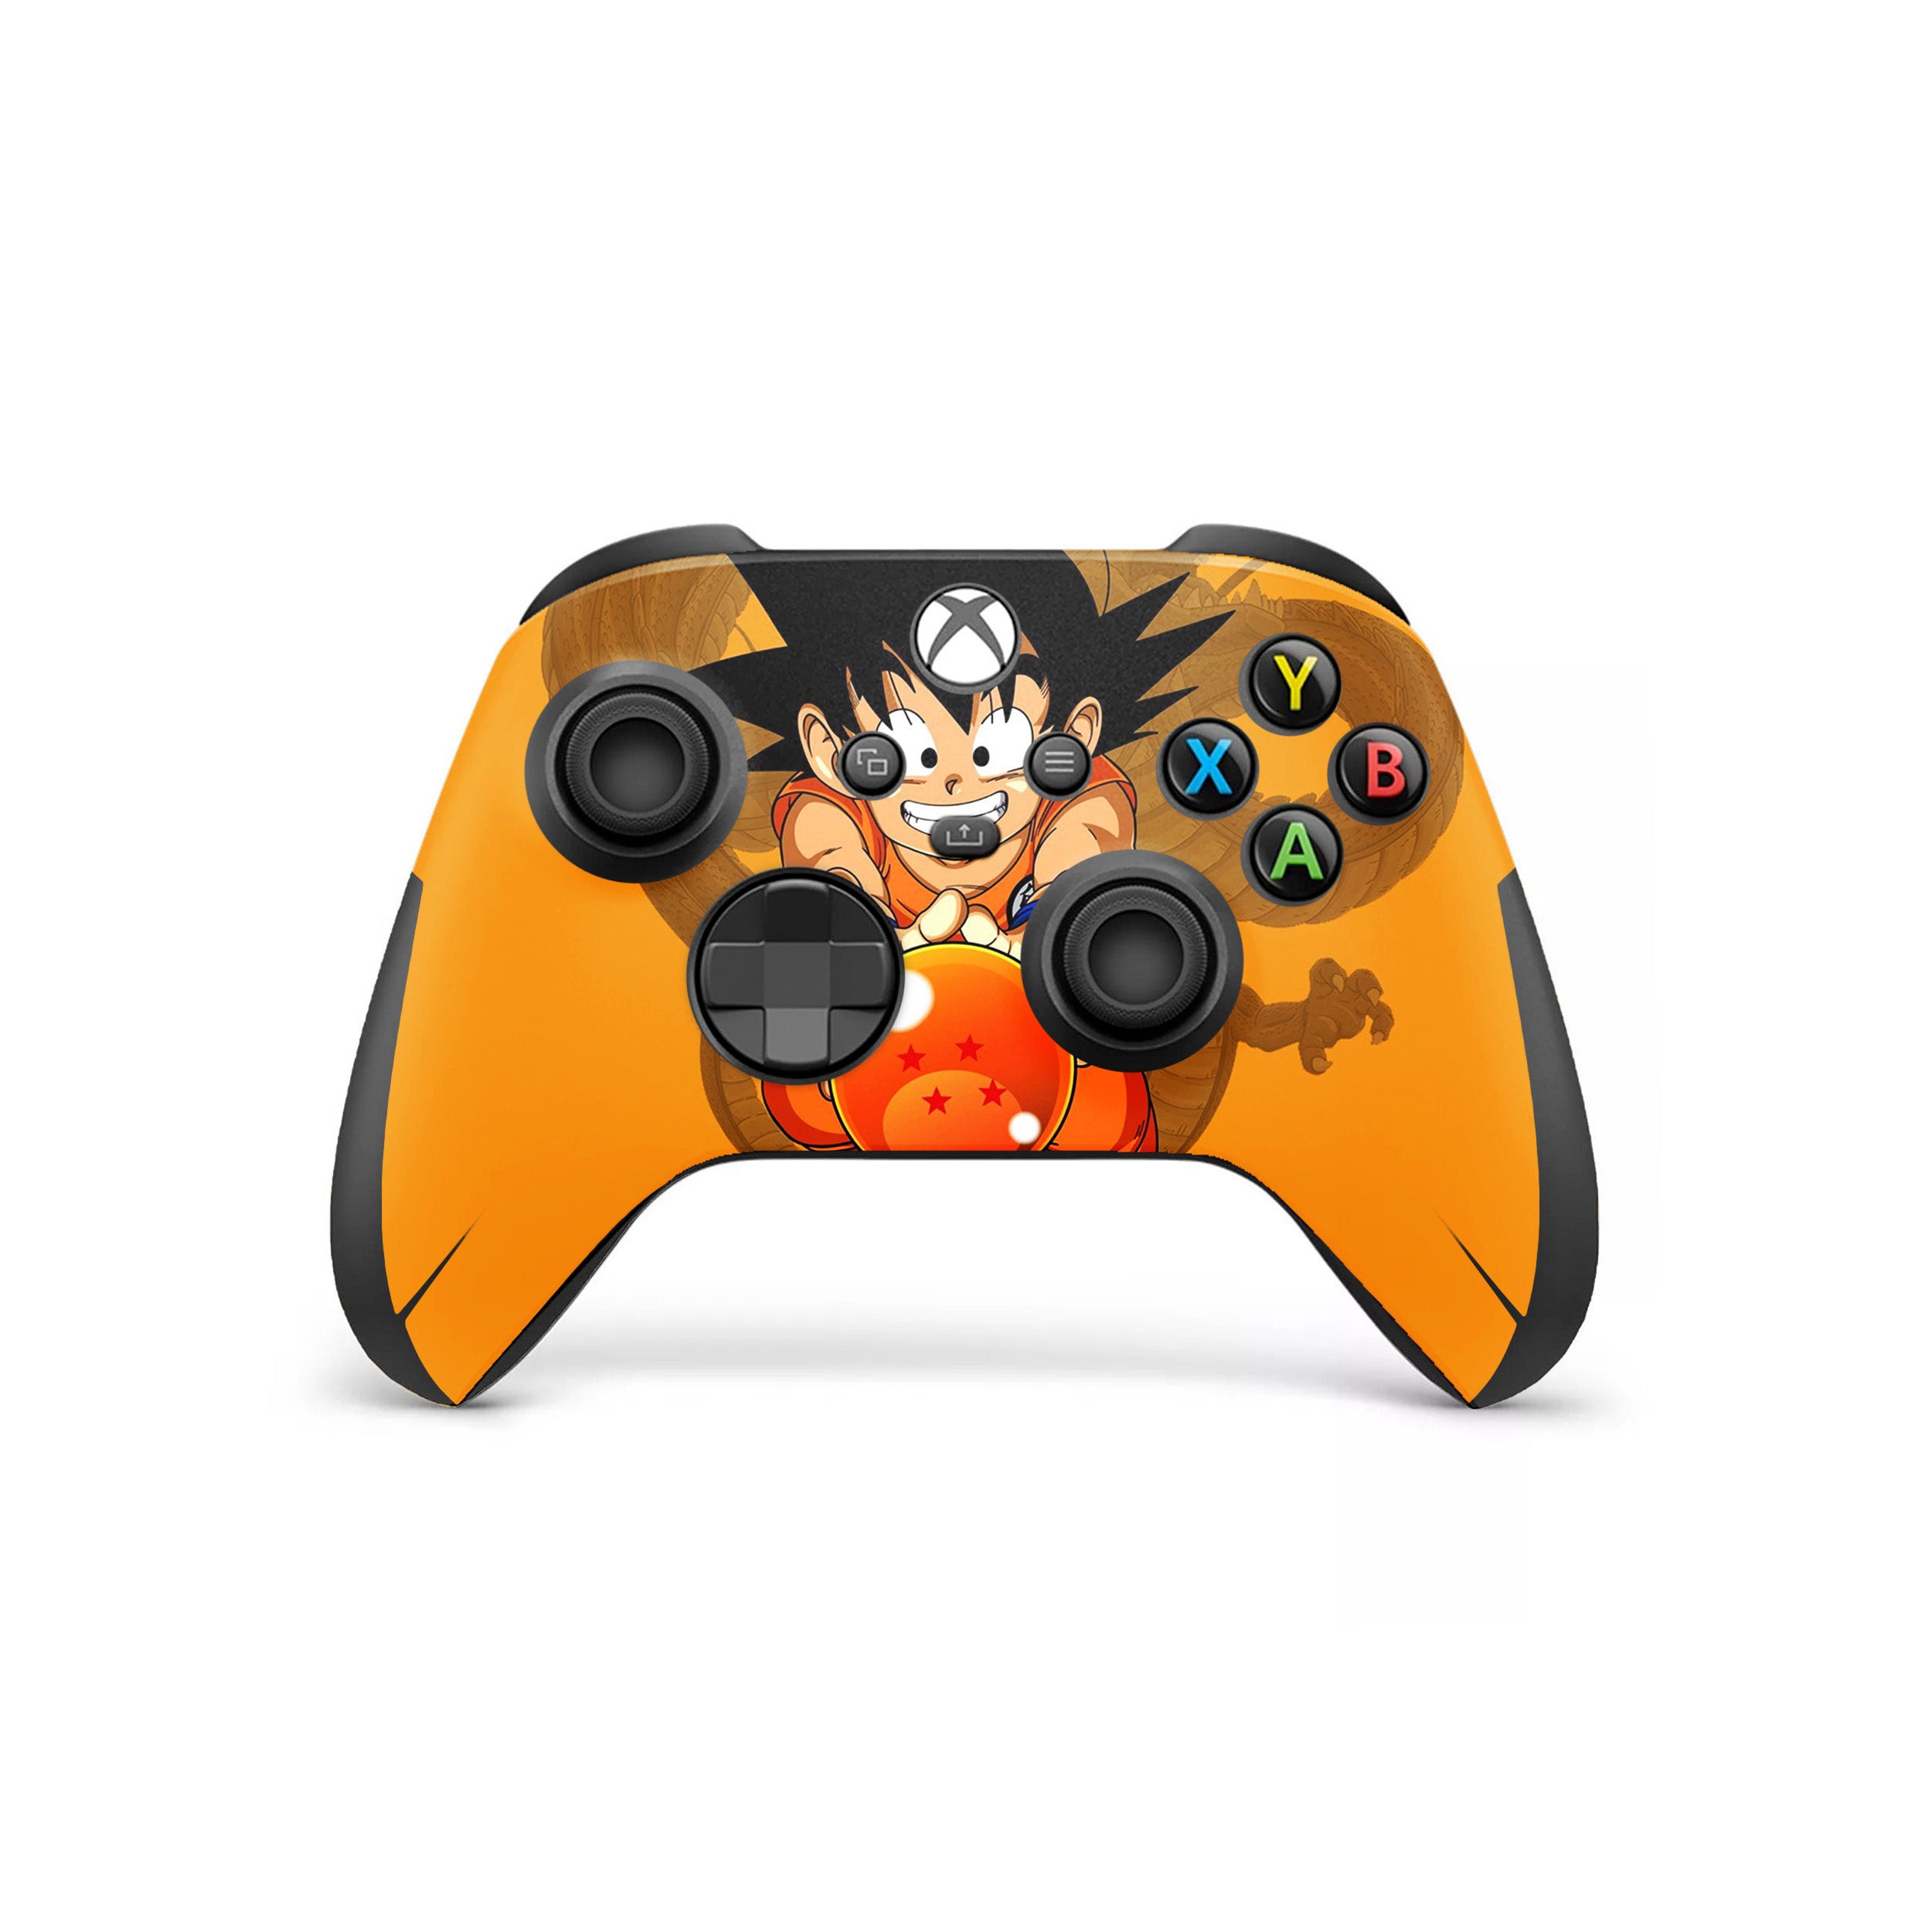 A video game skin featuring a Dragon Ball Z Goku design for the Xbox Wireless Controller.